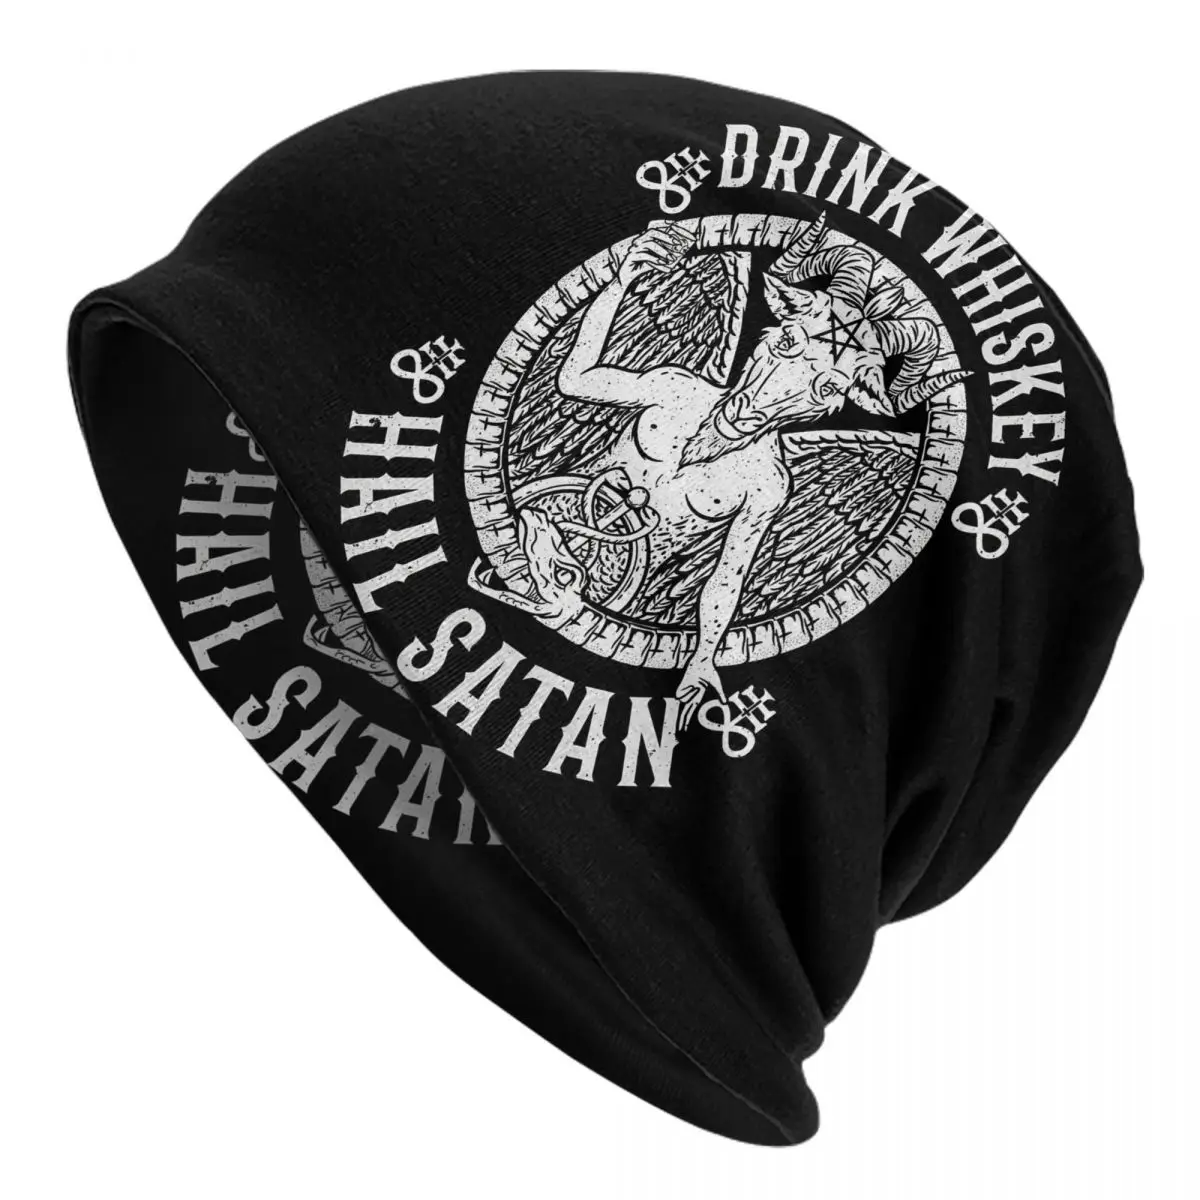 Pentagram,Satanic Adult Men's Women's Knit Hat Keep warm winter Funny knitted hat